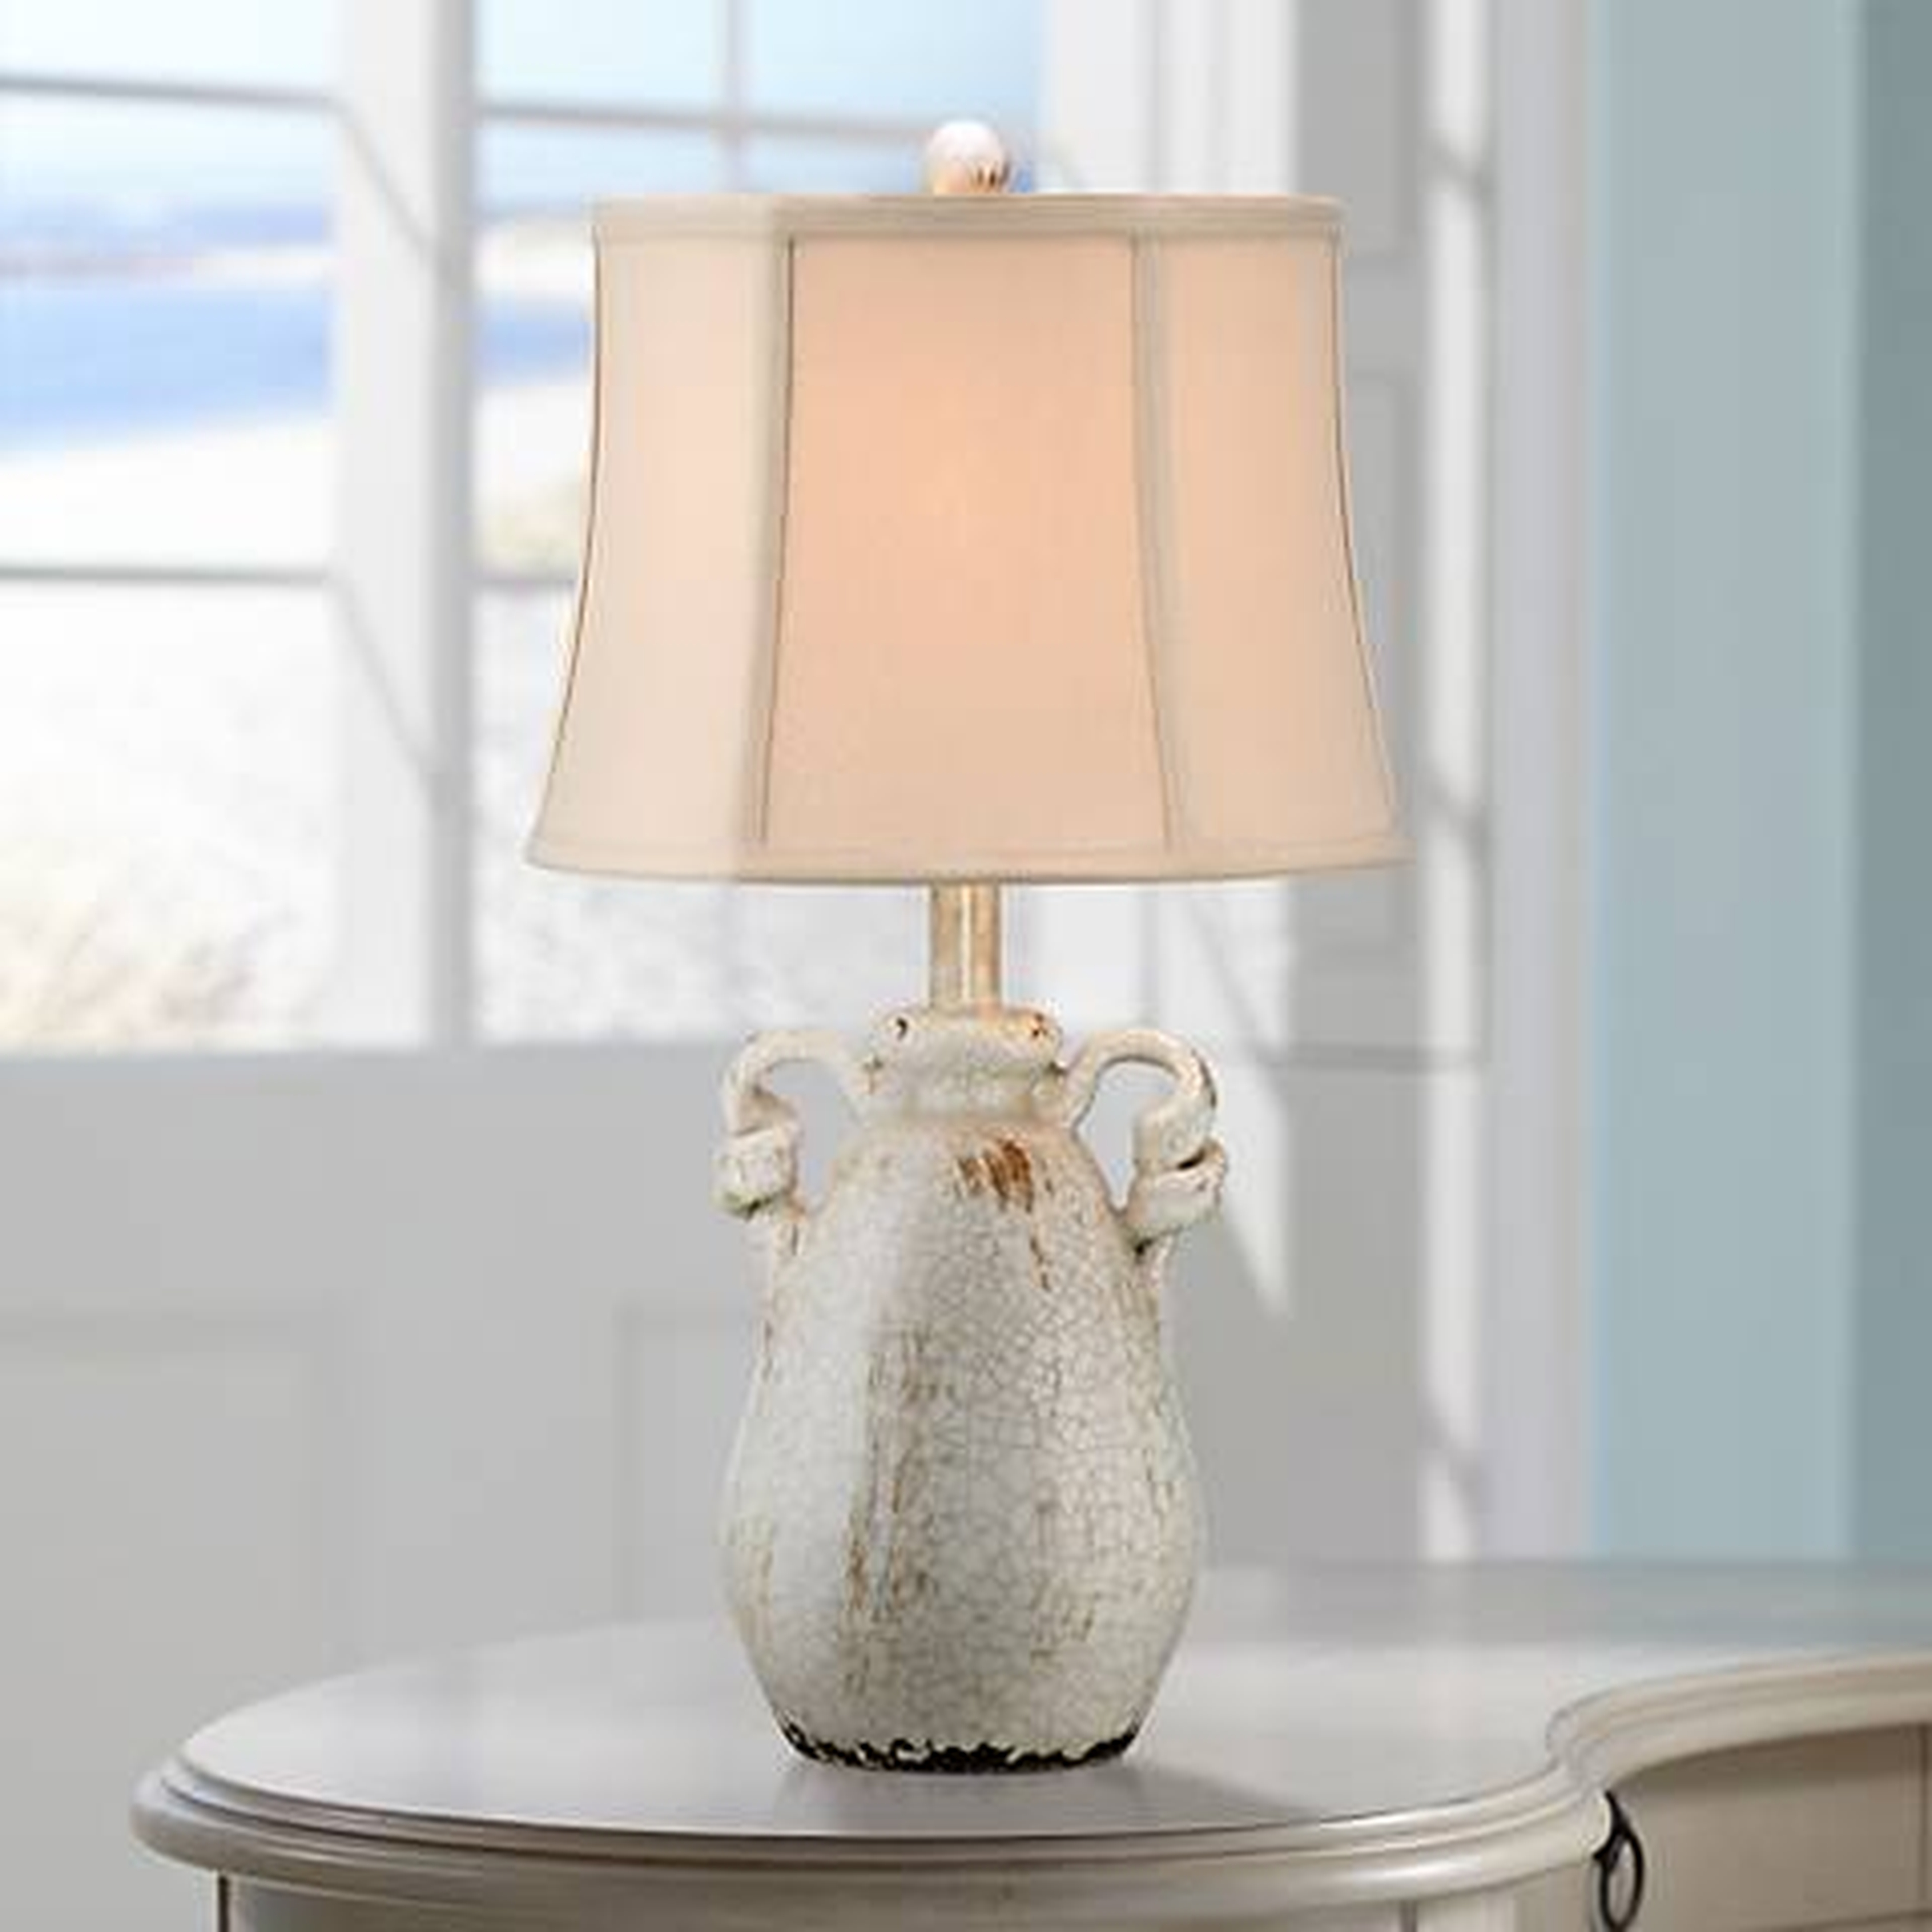 Regency Hill Sofia Crackled Ivory Rustic Jar Ceramic Table Lamp - Lamps Plus